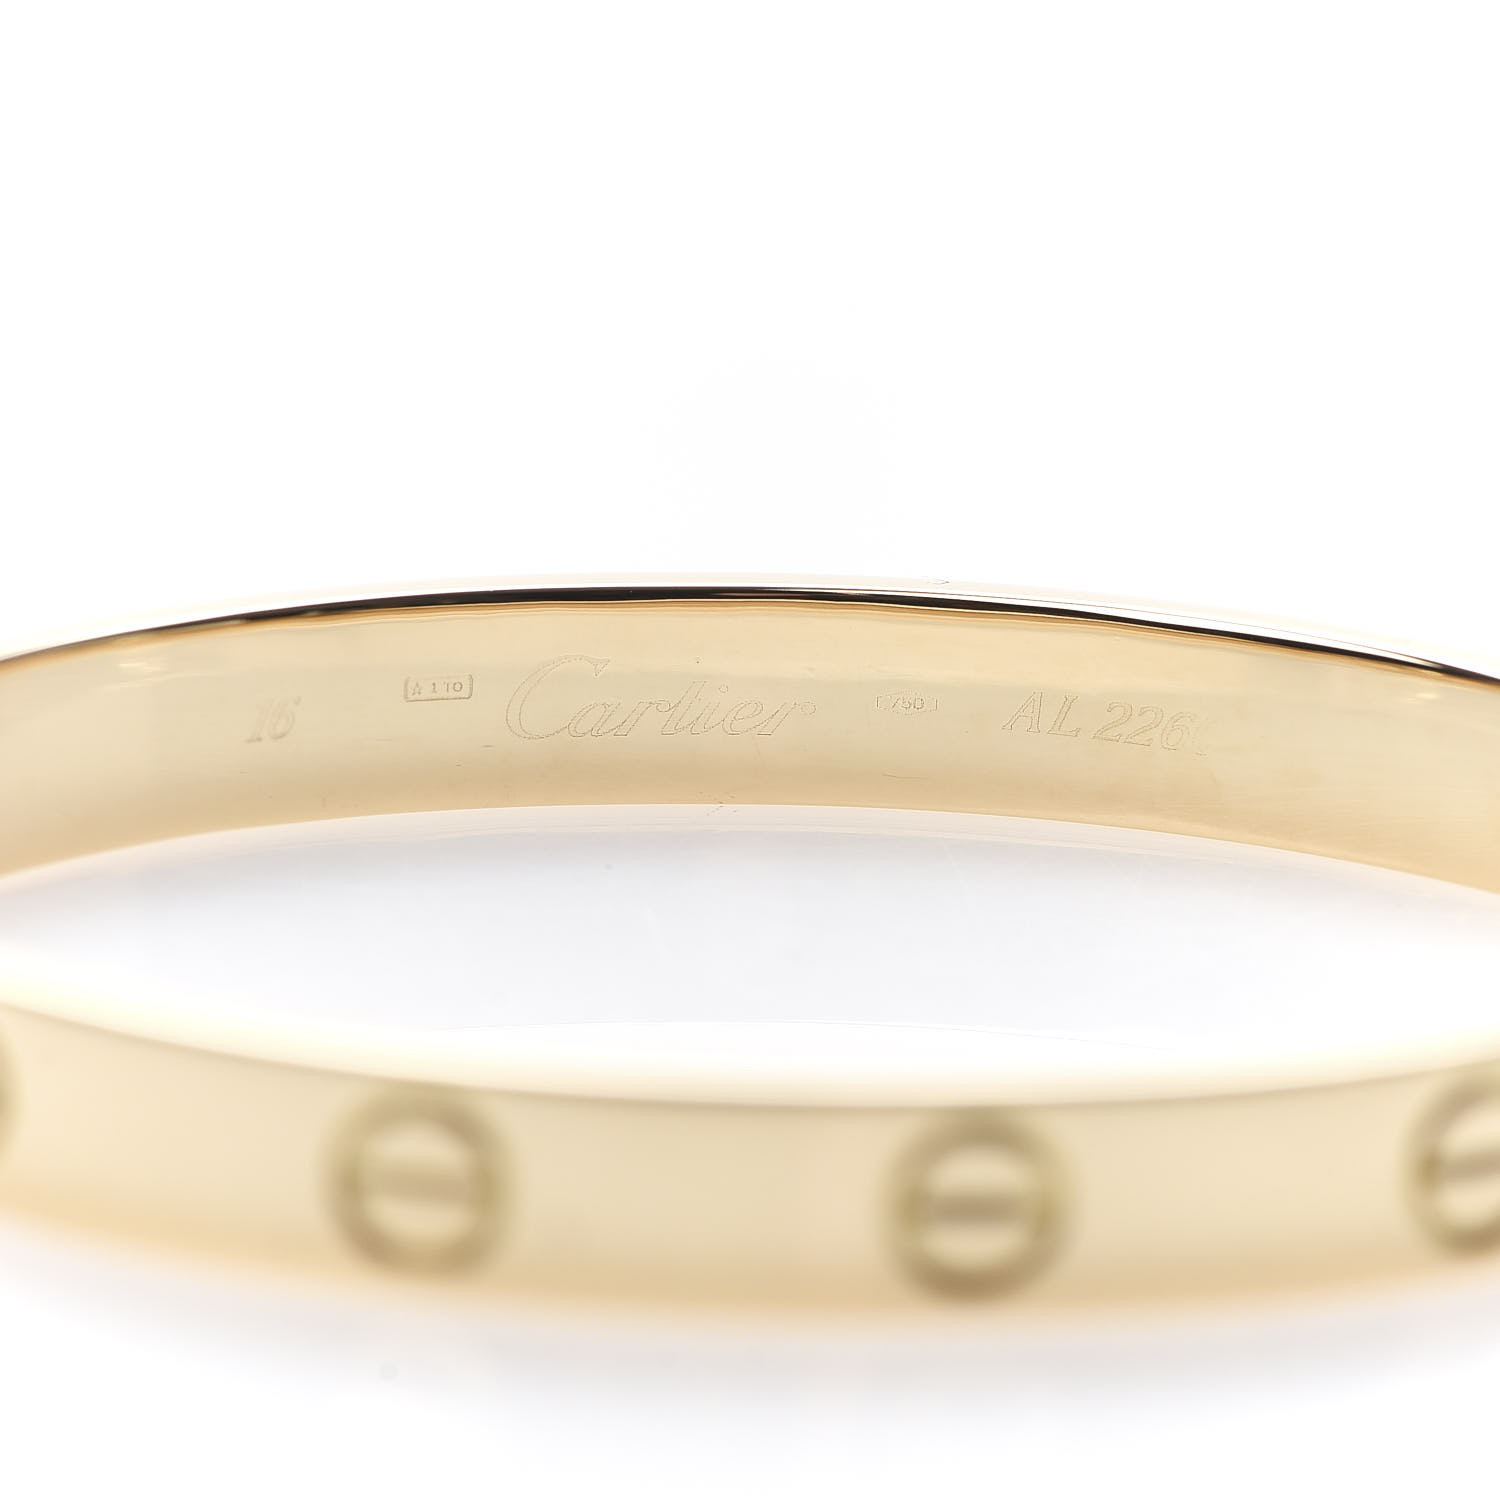 authentic cartier love bracelet serial number